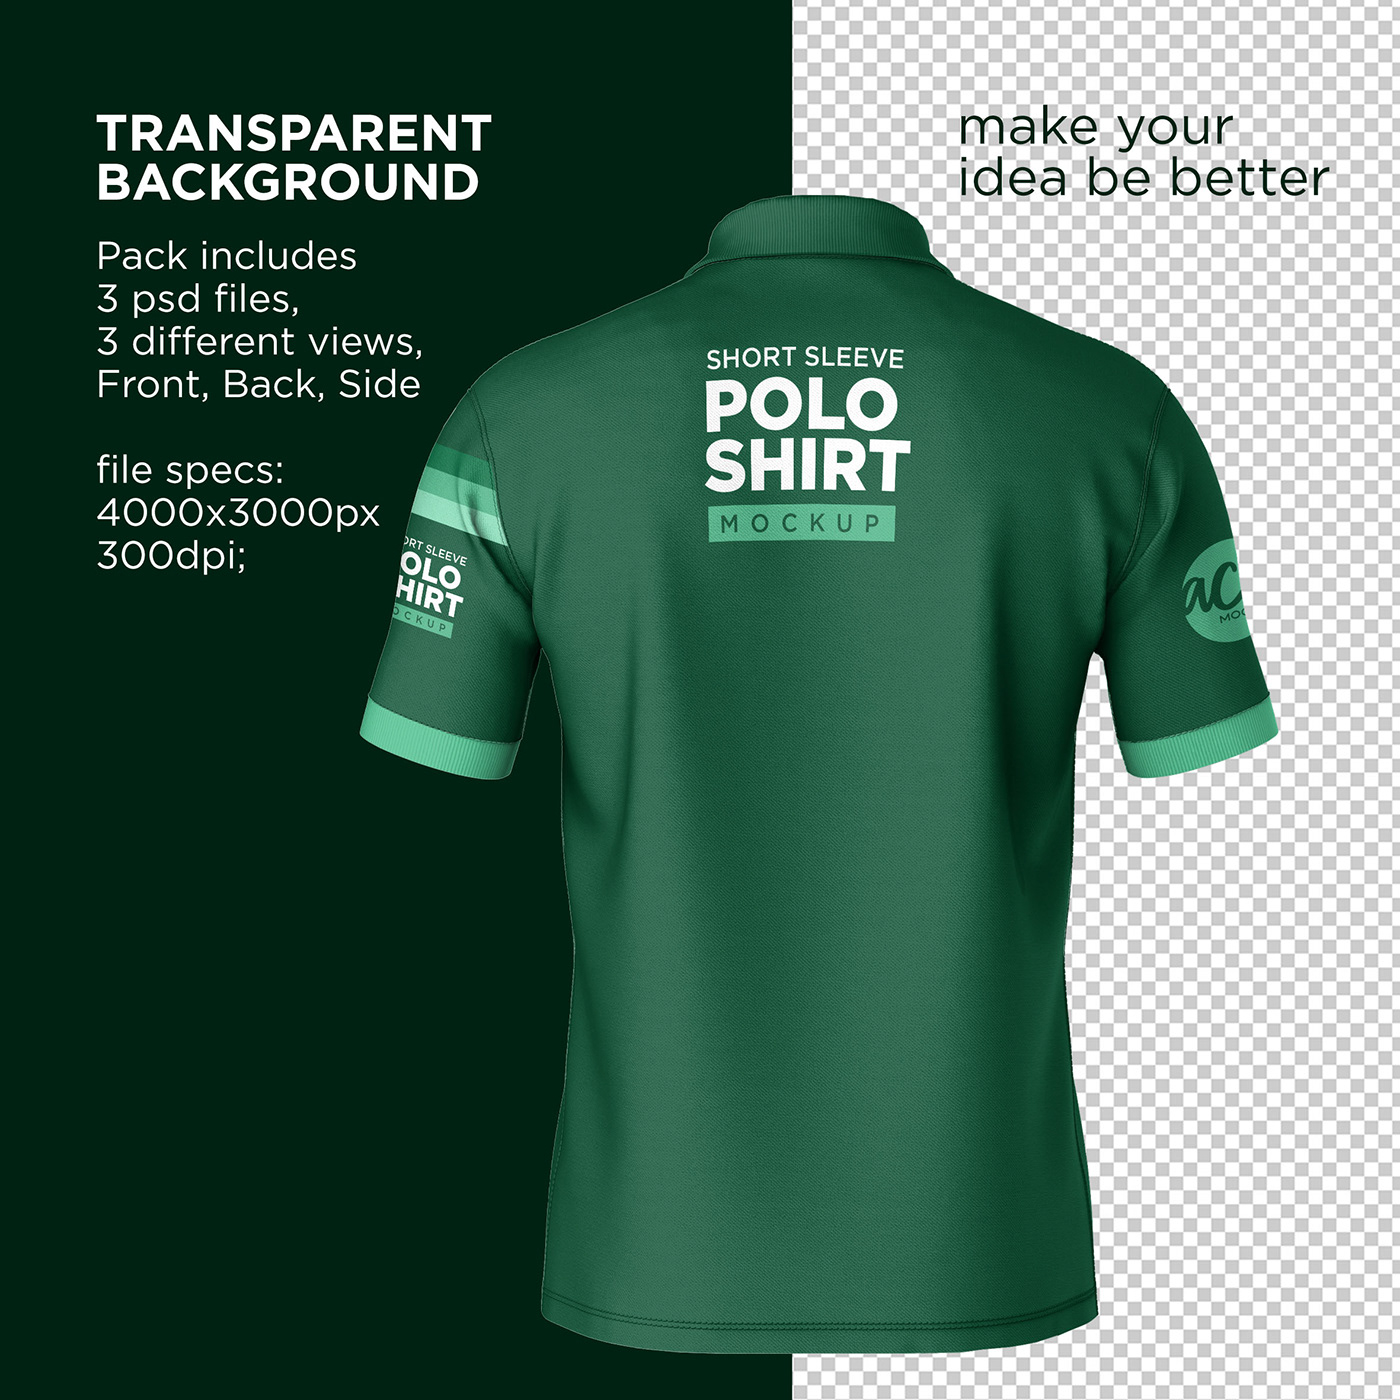 Polo shirt Mockup on Behance